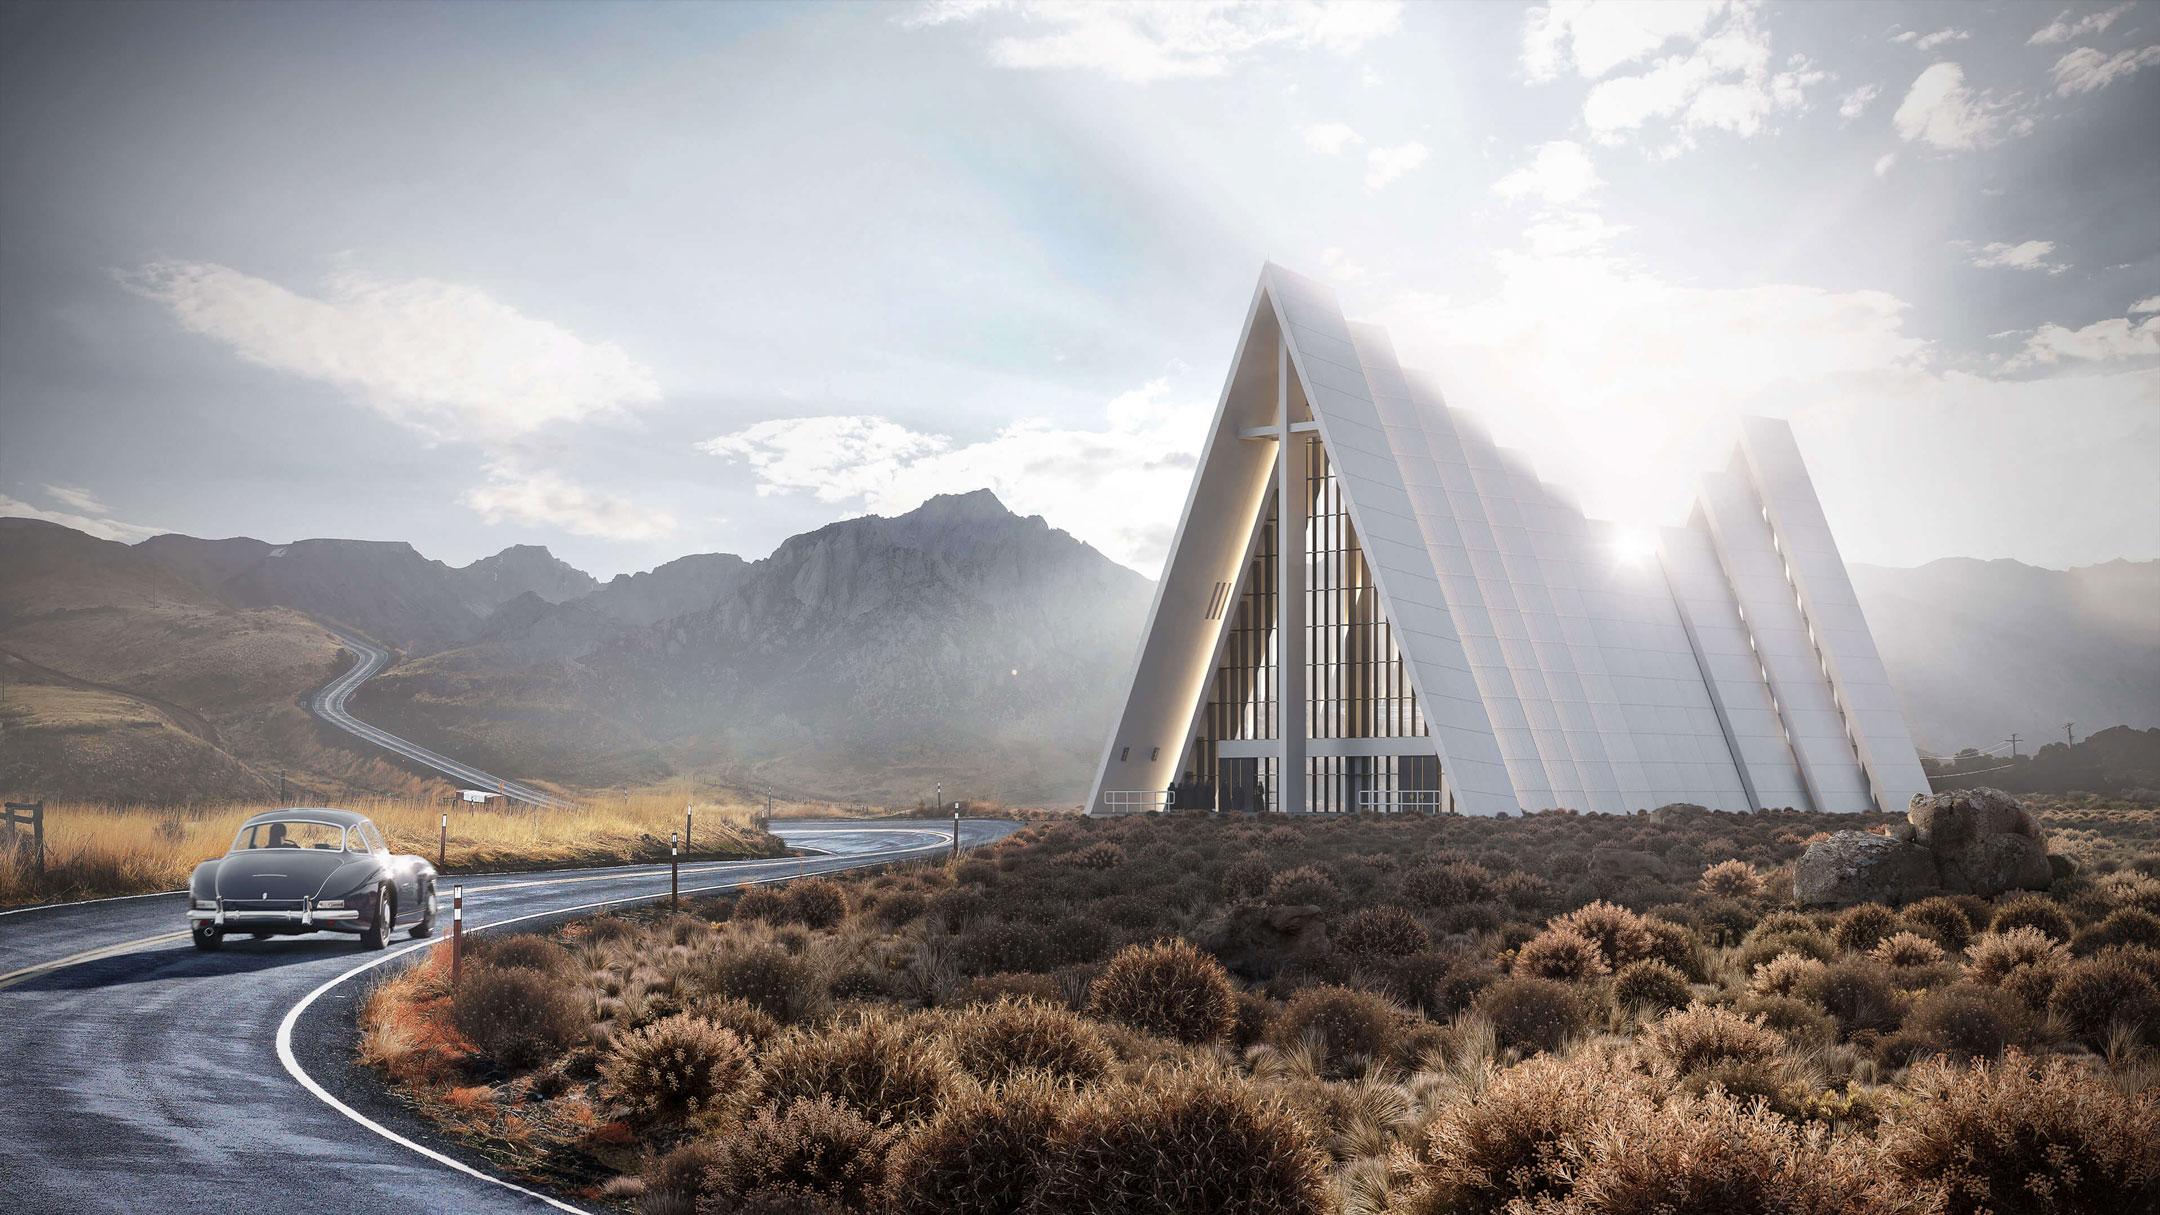 3D Rendering of a Norwegian Church Design